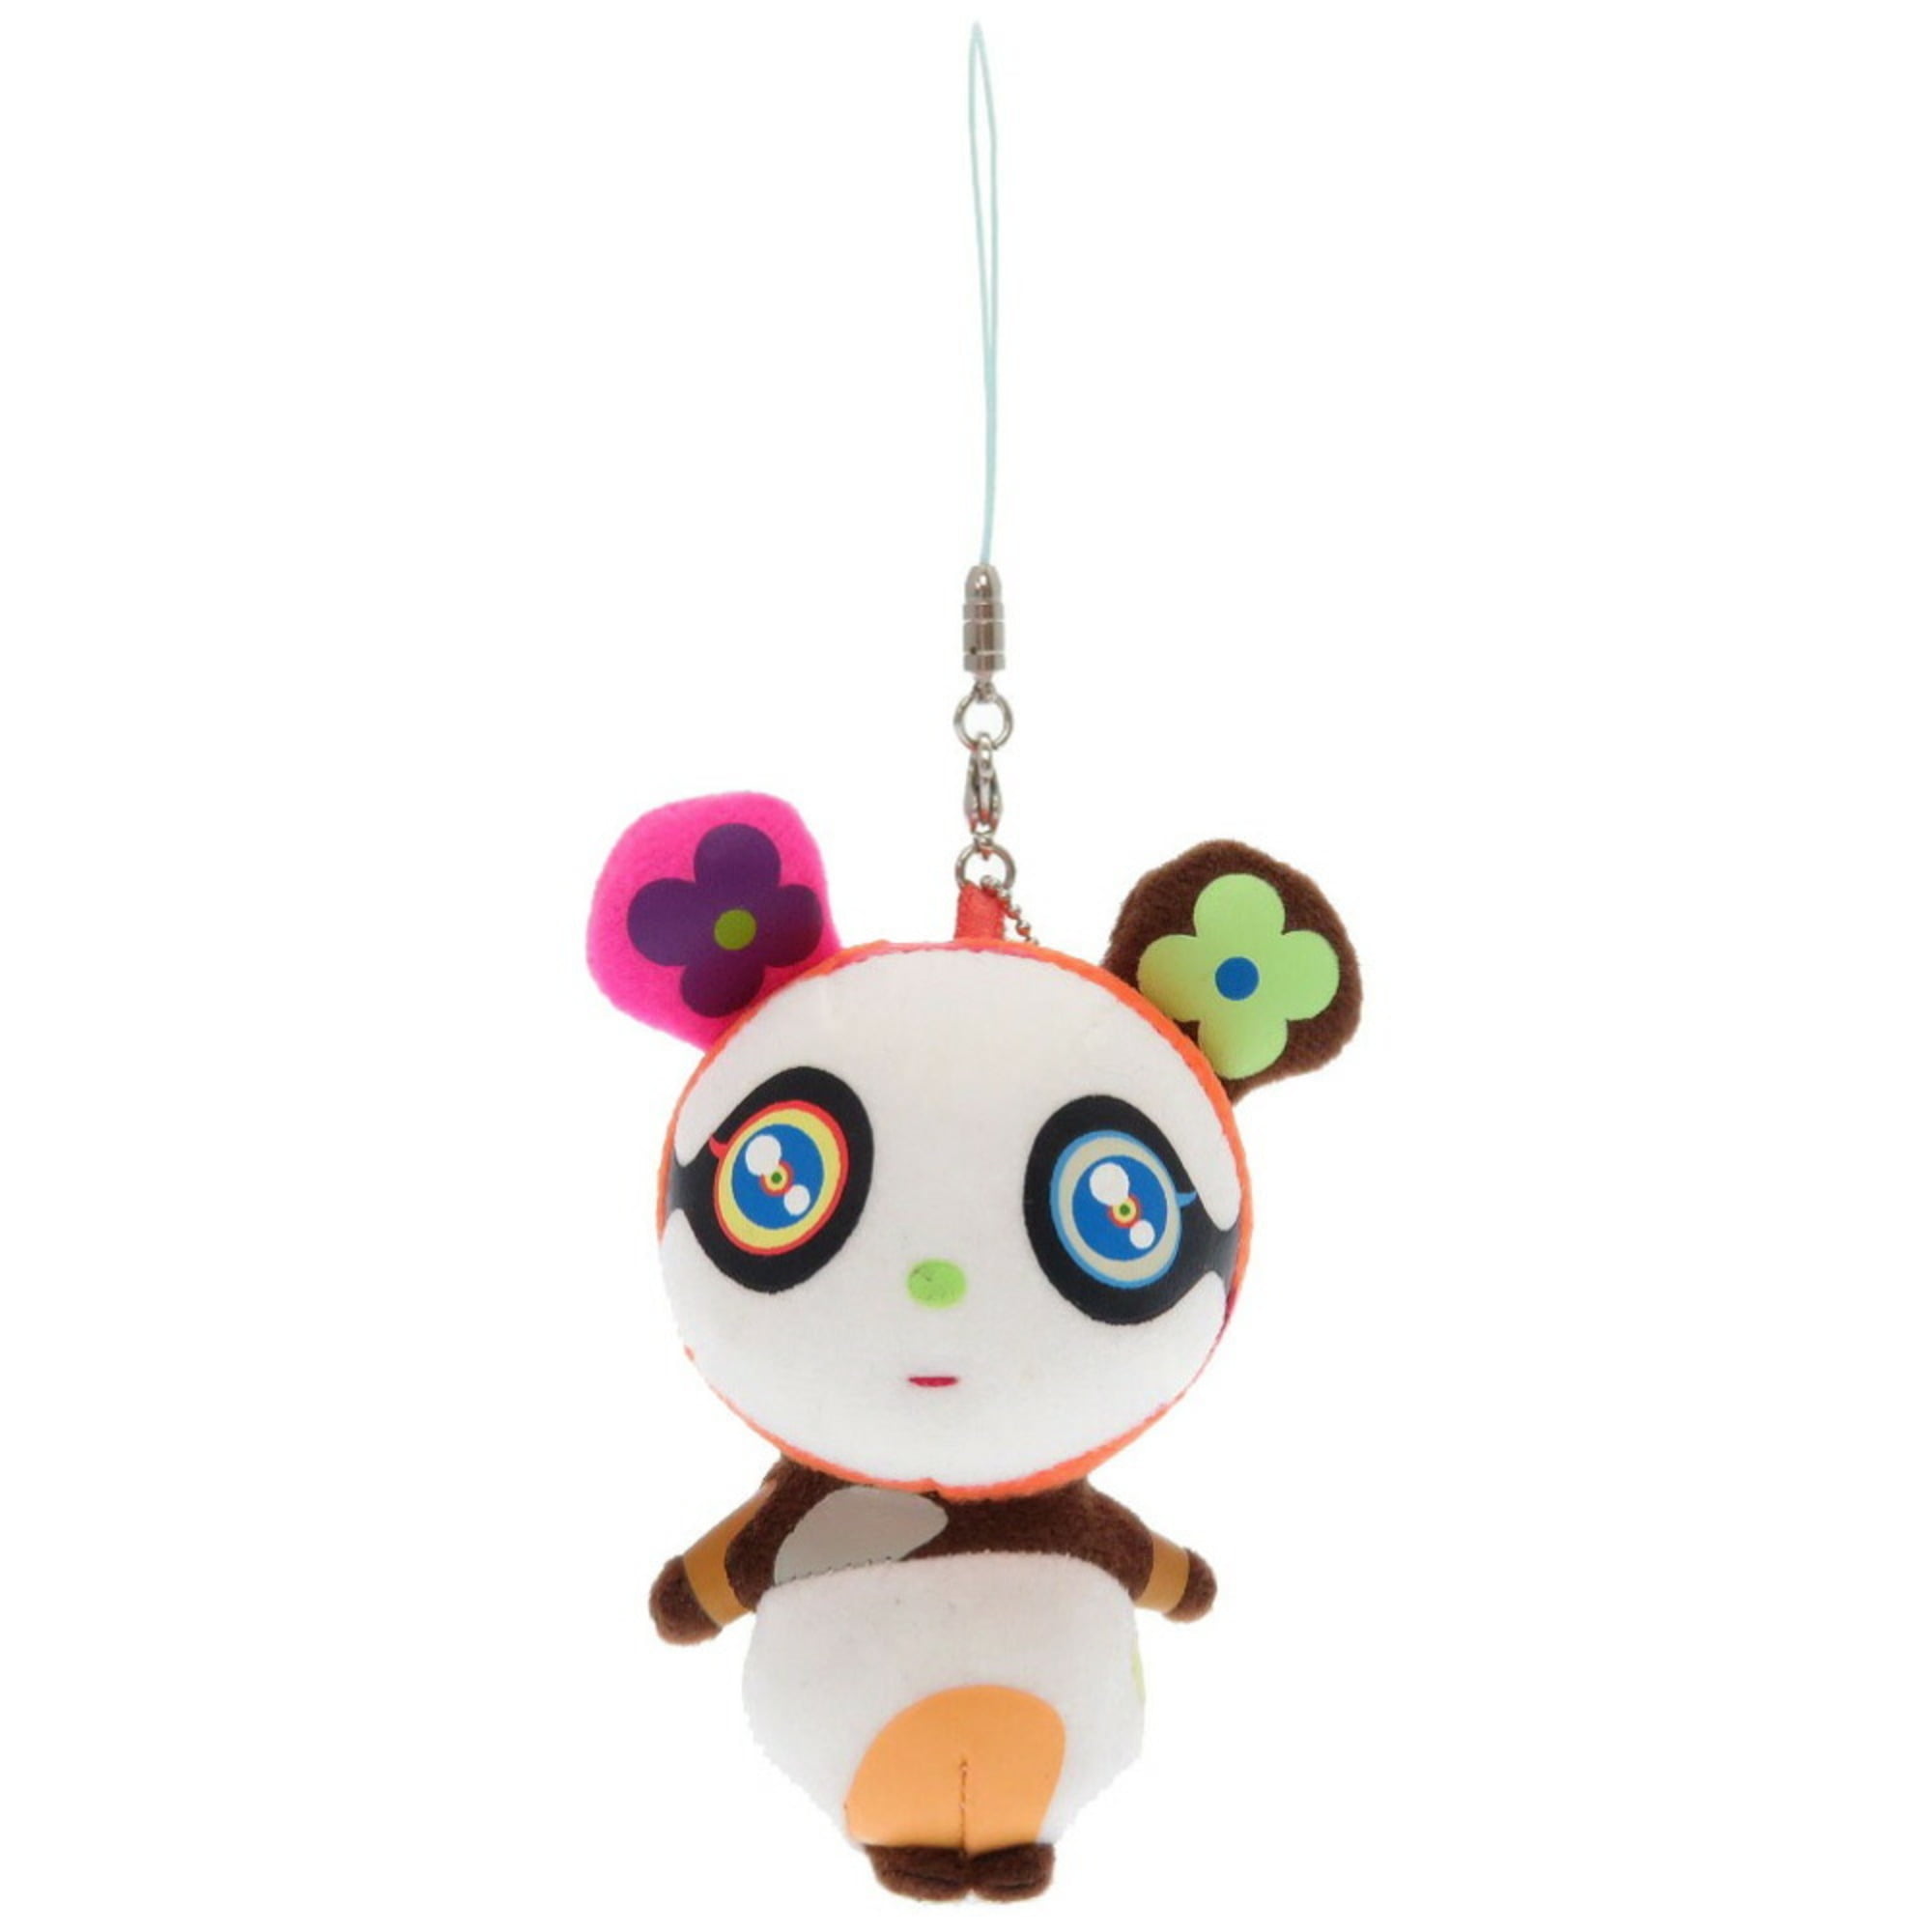 Louis Vuitton X Takashi Murakami Panda Key Chain Bag Charm Bag